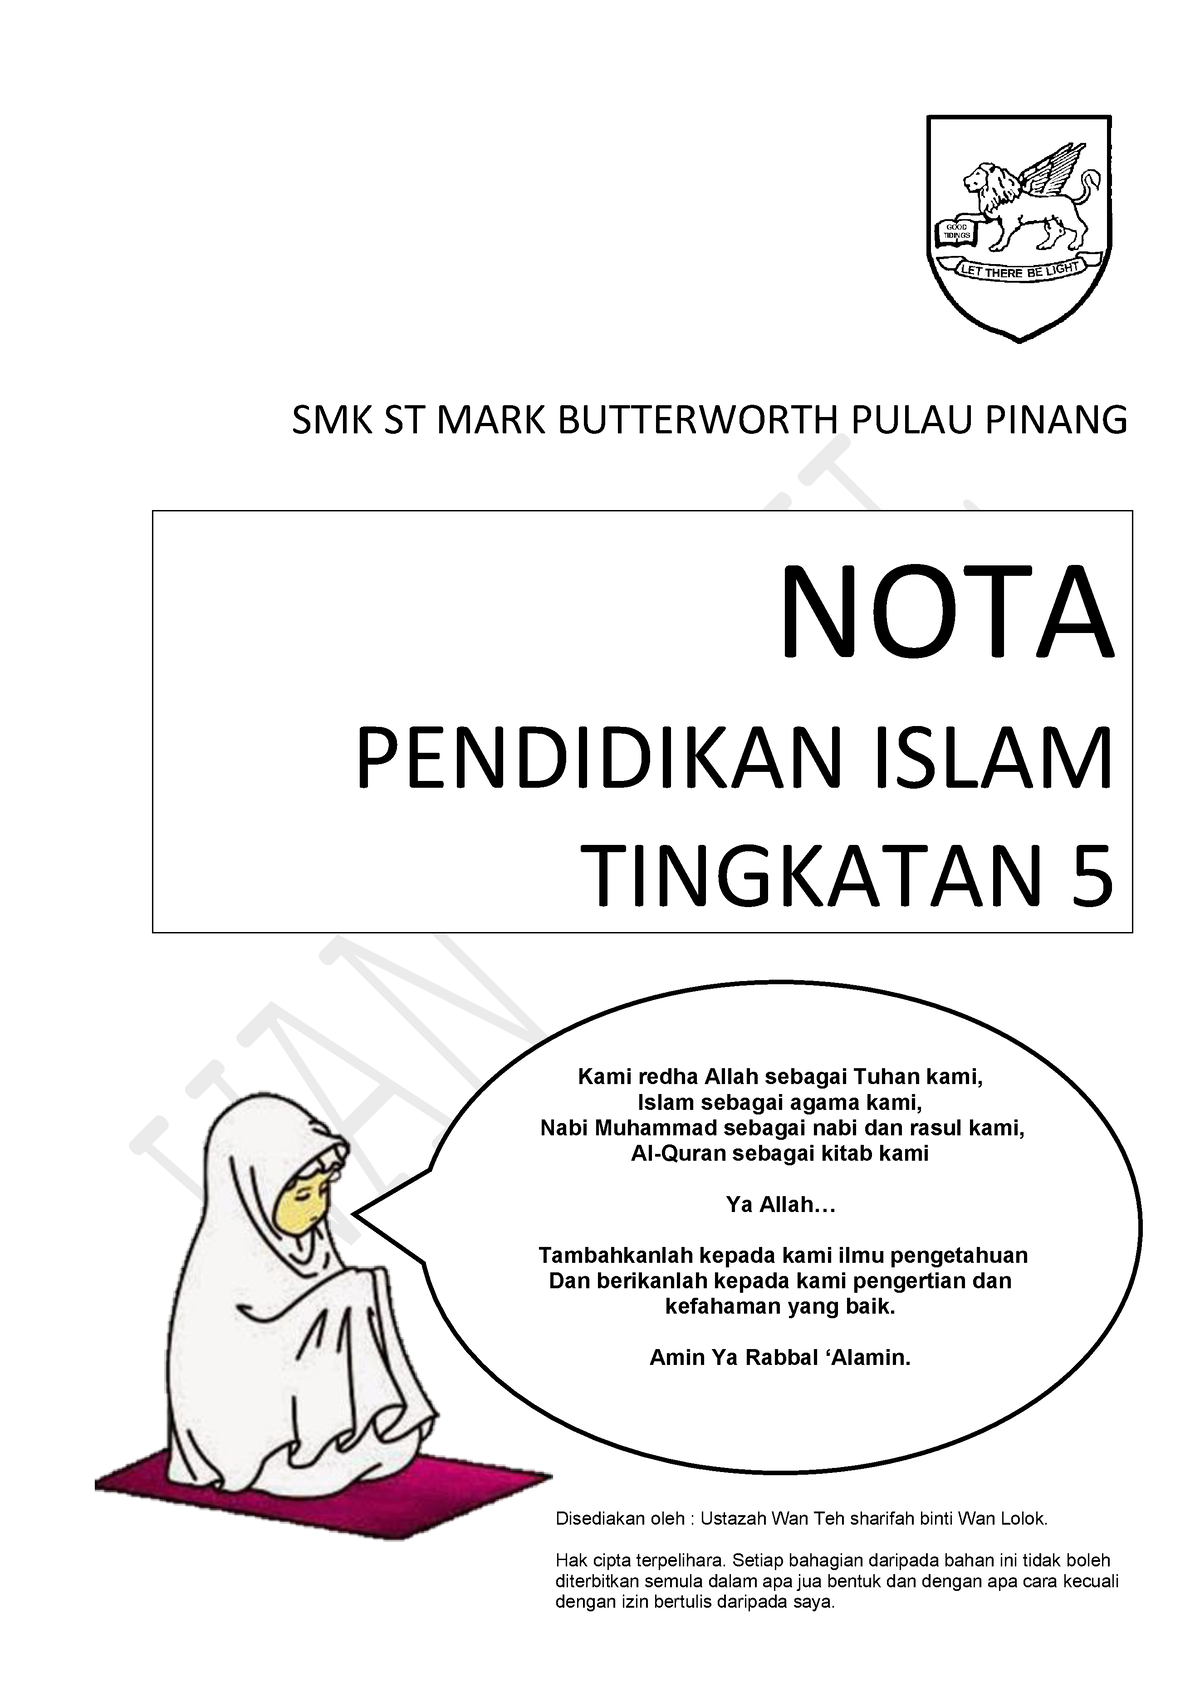 Nota Pendidikan Islam Tingkatan 5 Smk St Mark Butterworth Pulau Pinang Kami Redha Allah Sebagai Studocu